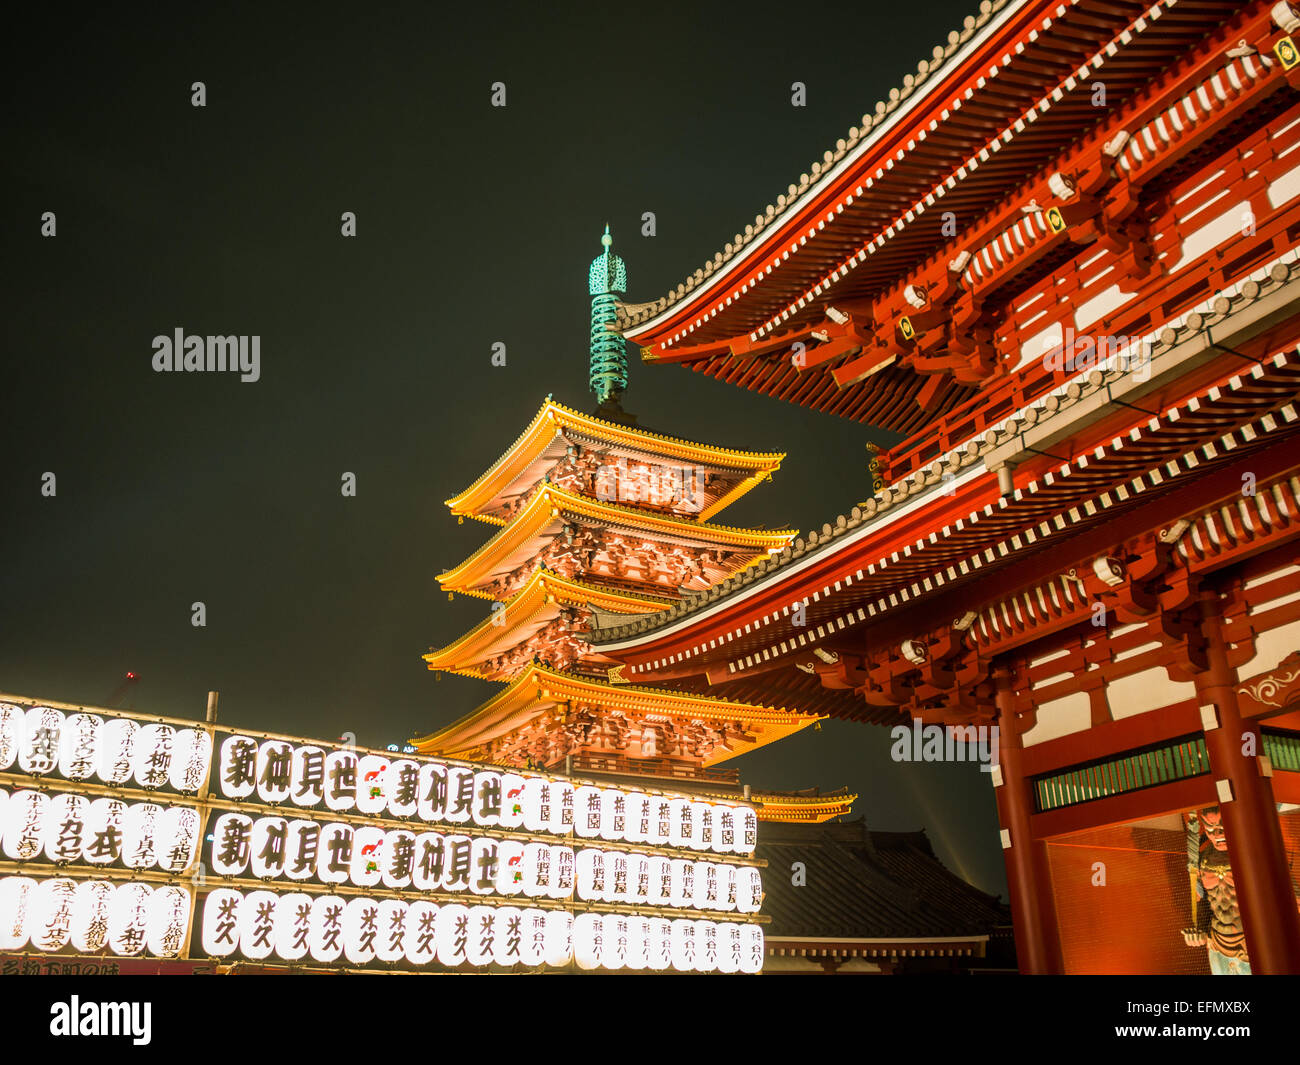 Senso-ji temple and pagoda at night by the white lanterns Stock Photo